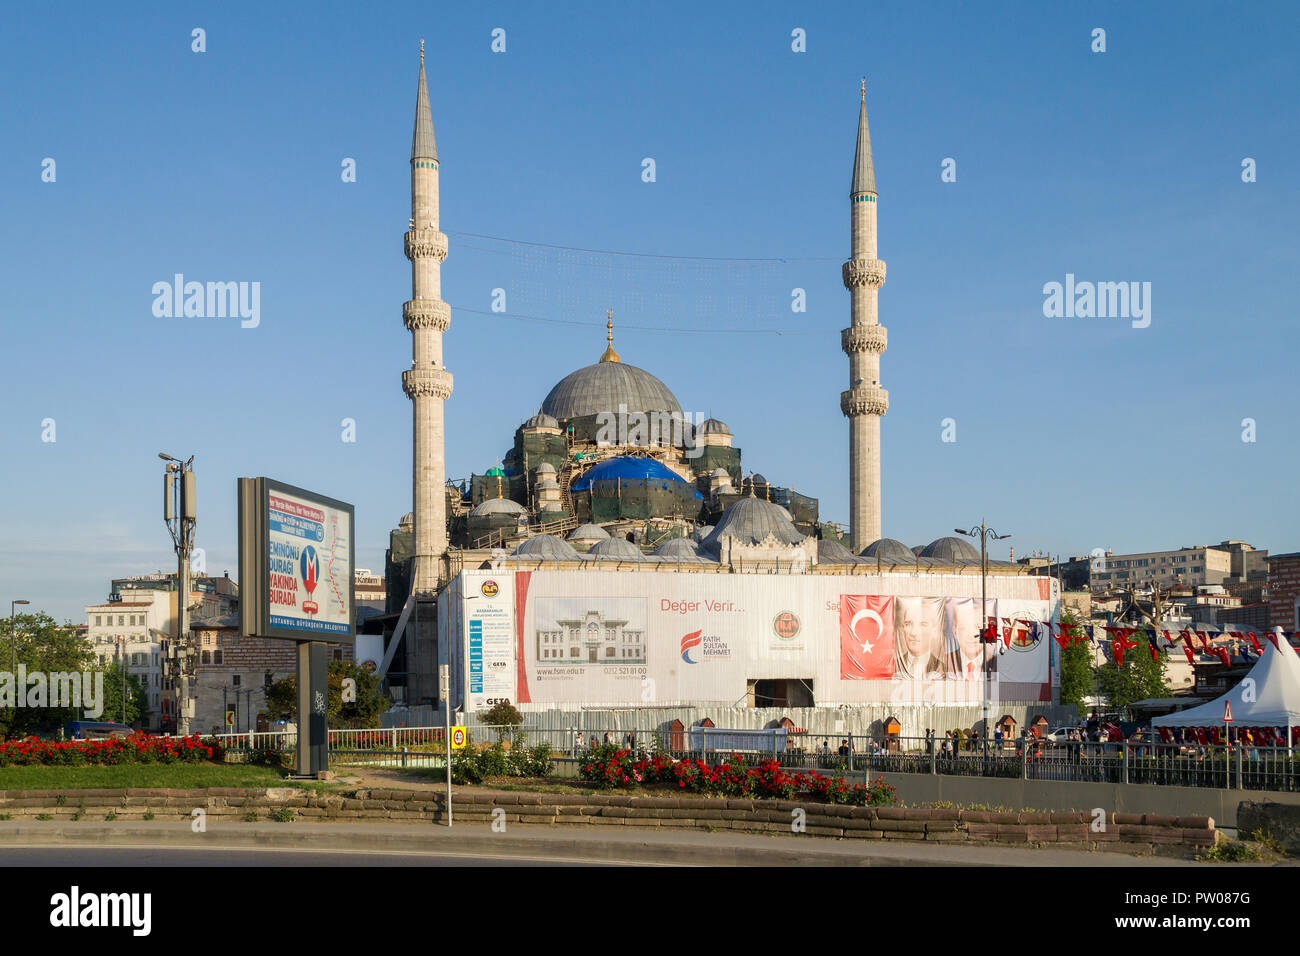 Yeni Cami (New Mosque), Istanbul Old city, Turkey Stock Photo - Alamy